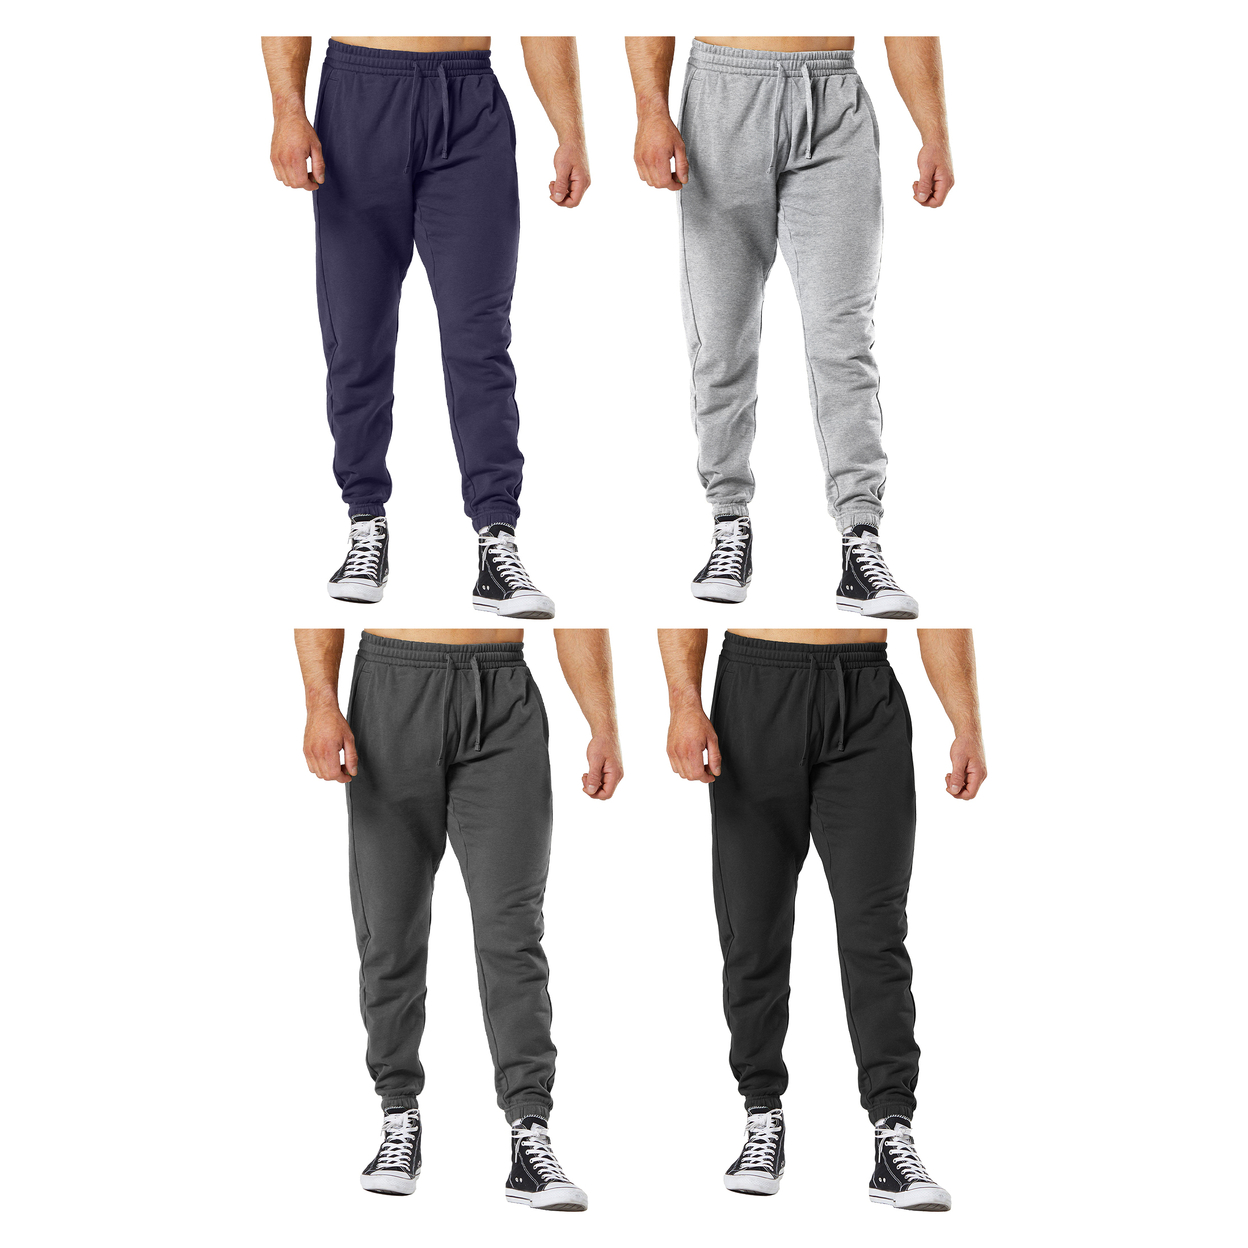 2-Pack: Men's Ultra-Soft Cozy Winter Warm Casual Fleece-Lined Sweatpants Jogger - Black & Navy, Medium